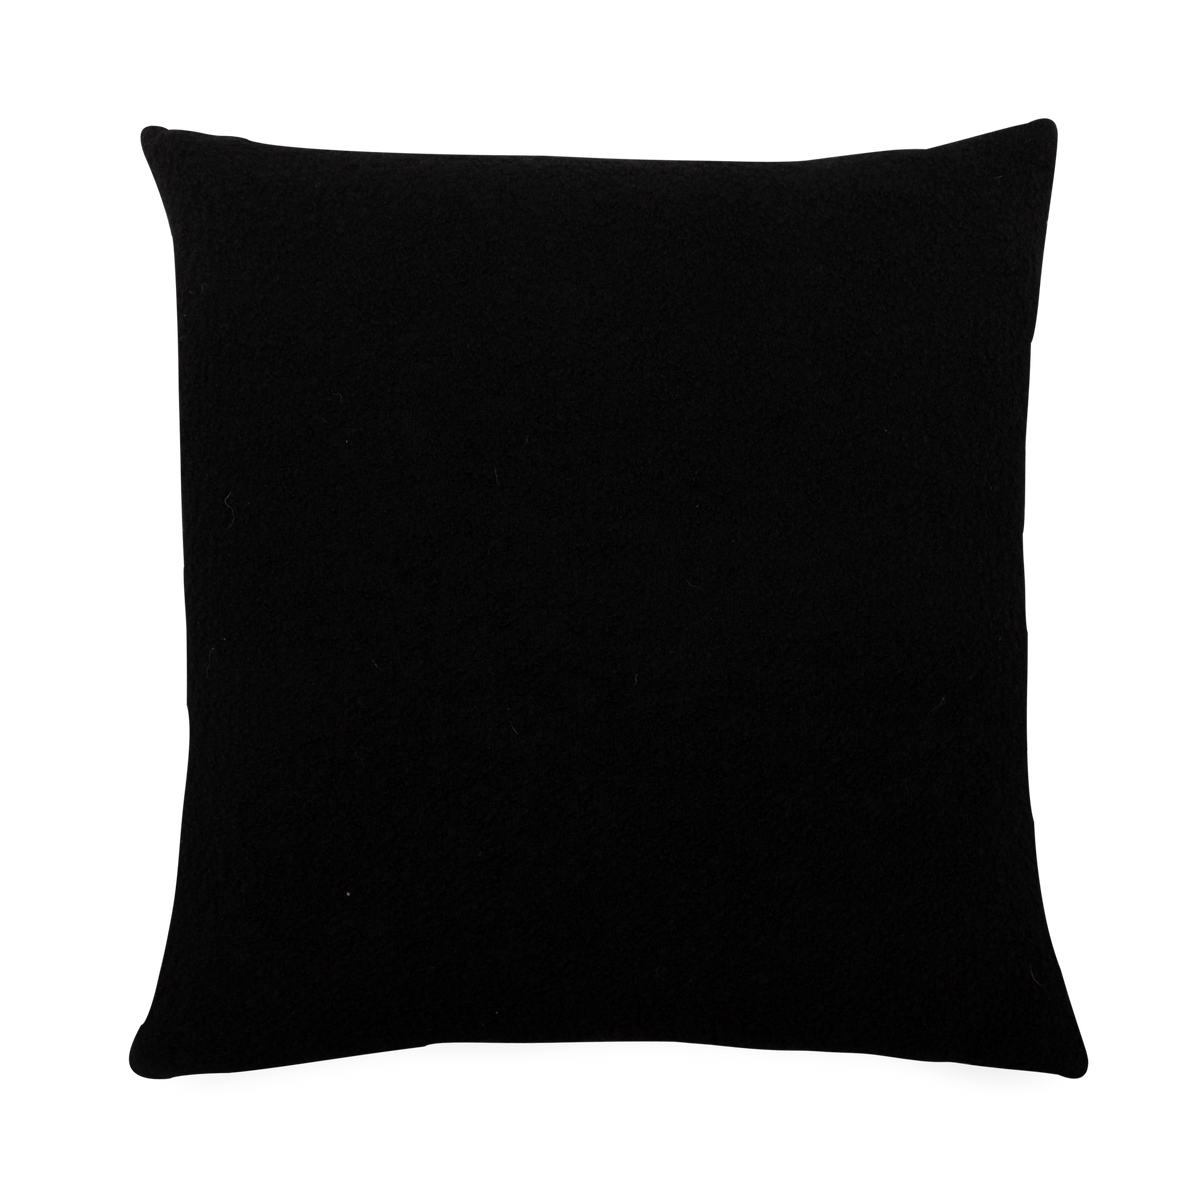 Wool Boucle Pillow